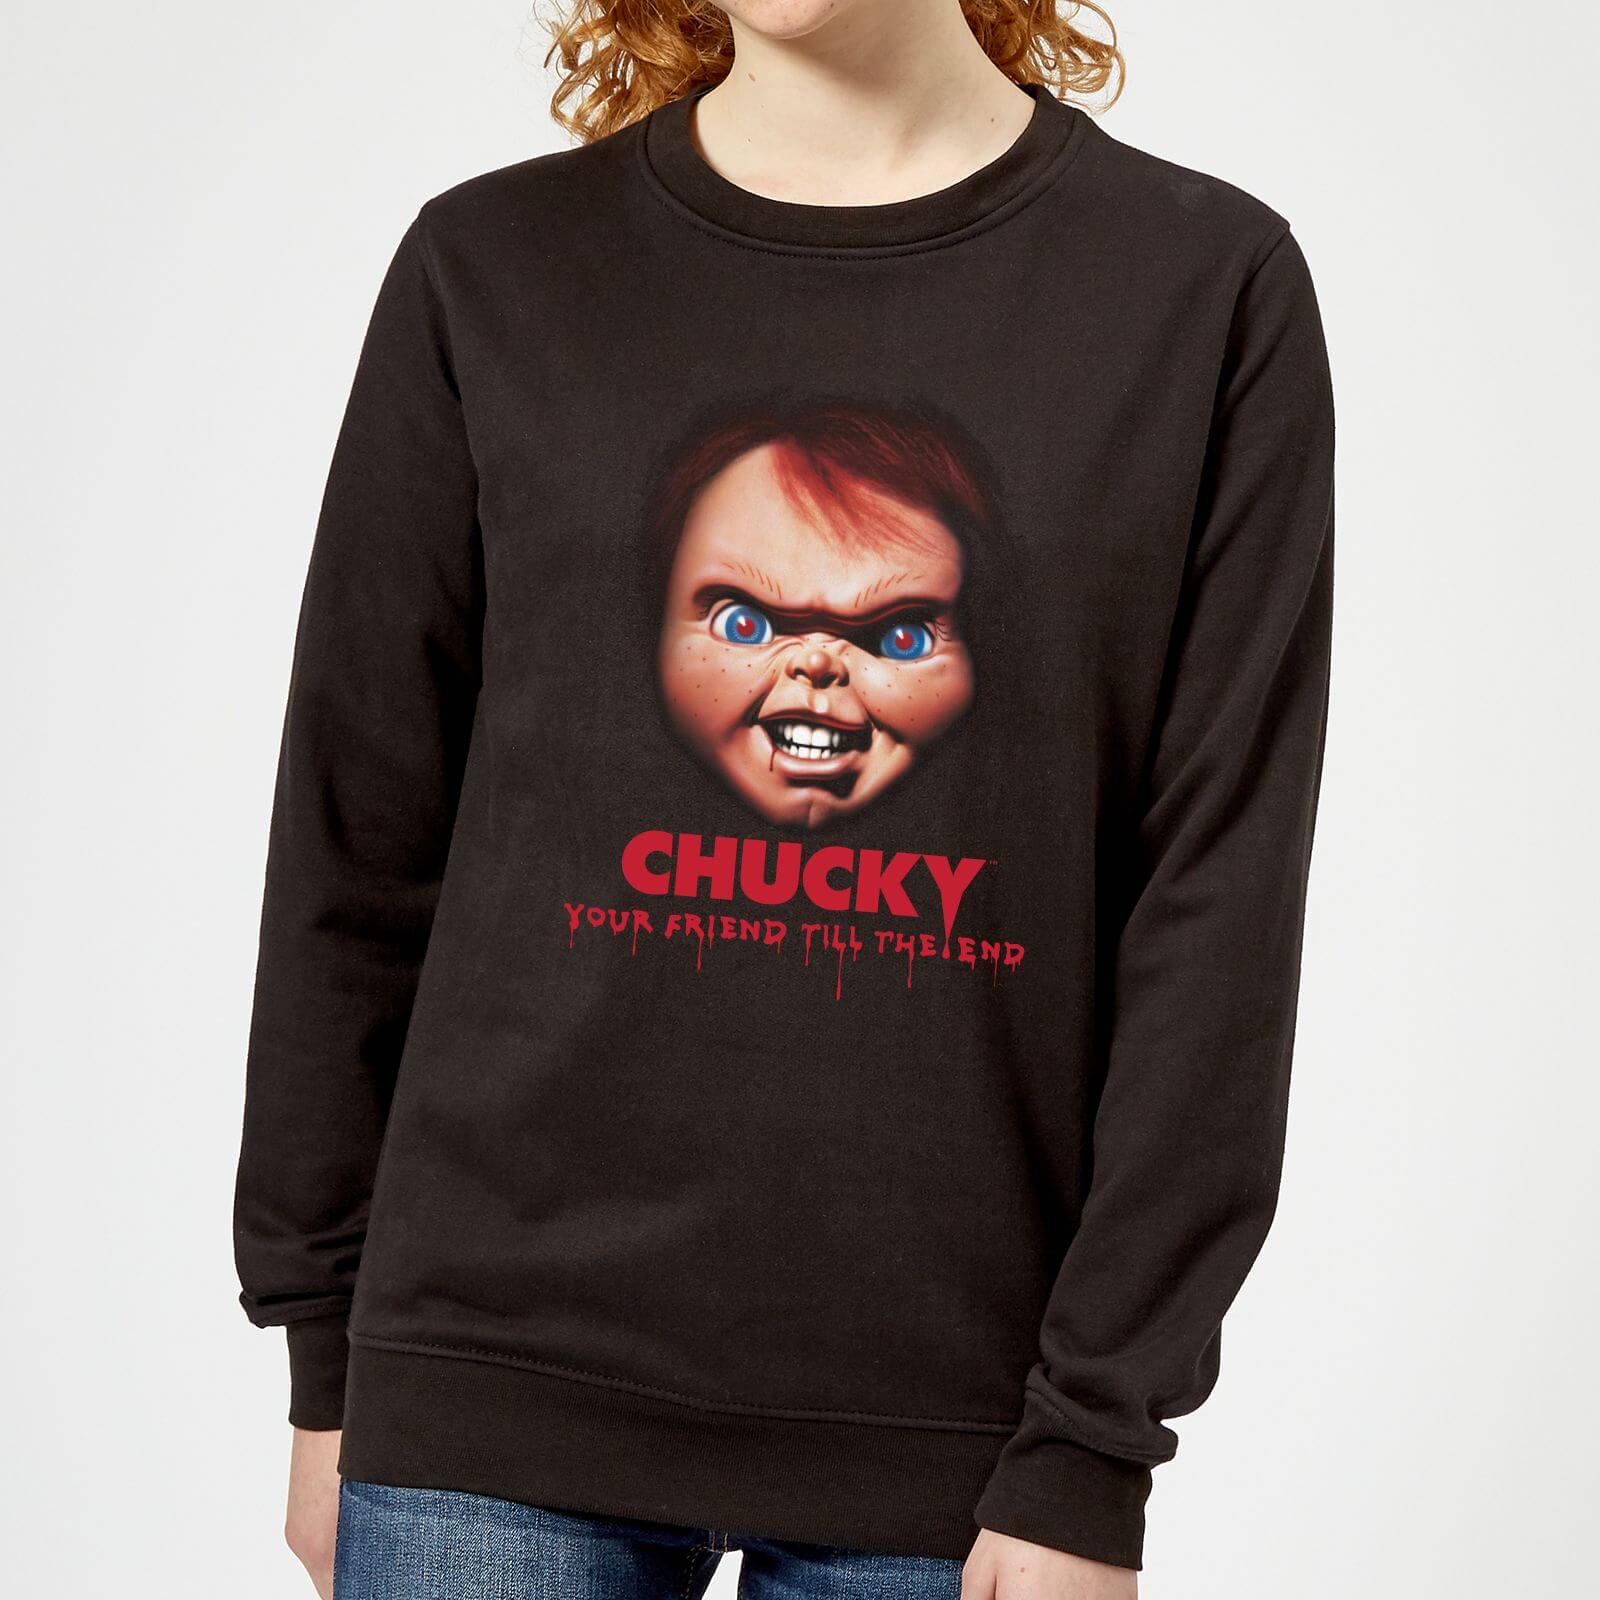 Chucky Friends Till The End Women's Sweatshirt - Black - XS